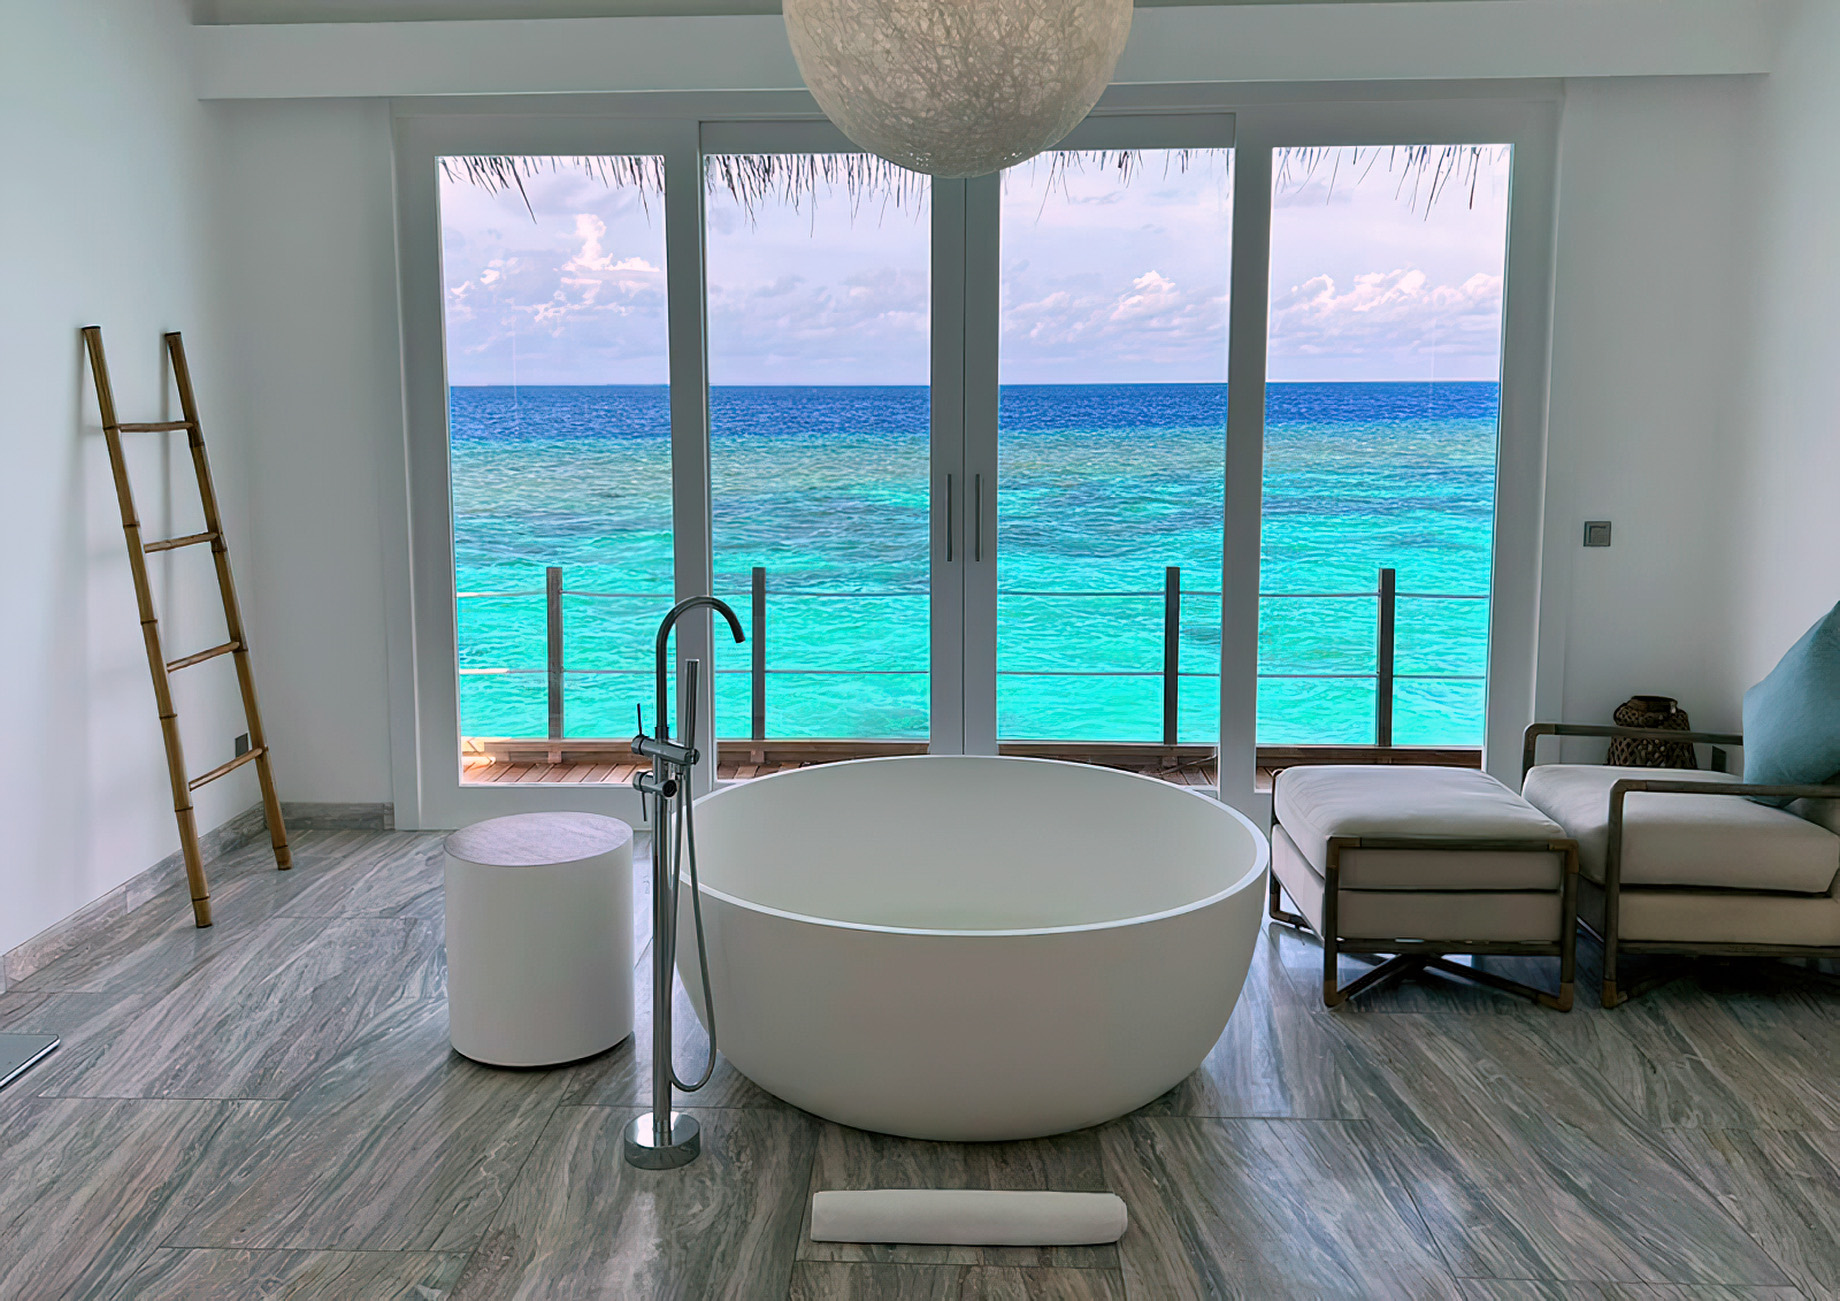 Baglioni Resort Maldives – Maagau Island, Rinbudhoo, Maldives – Presidential Water Villa Bathroom Tub Ocean View